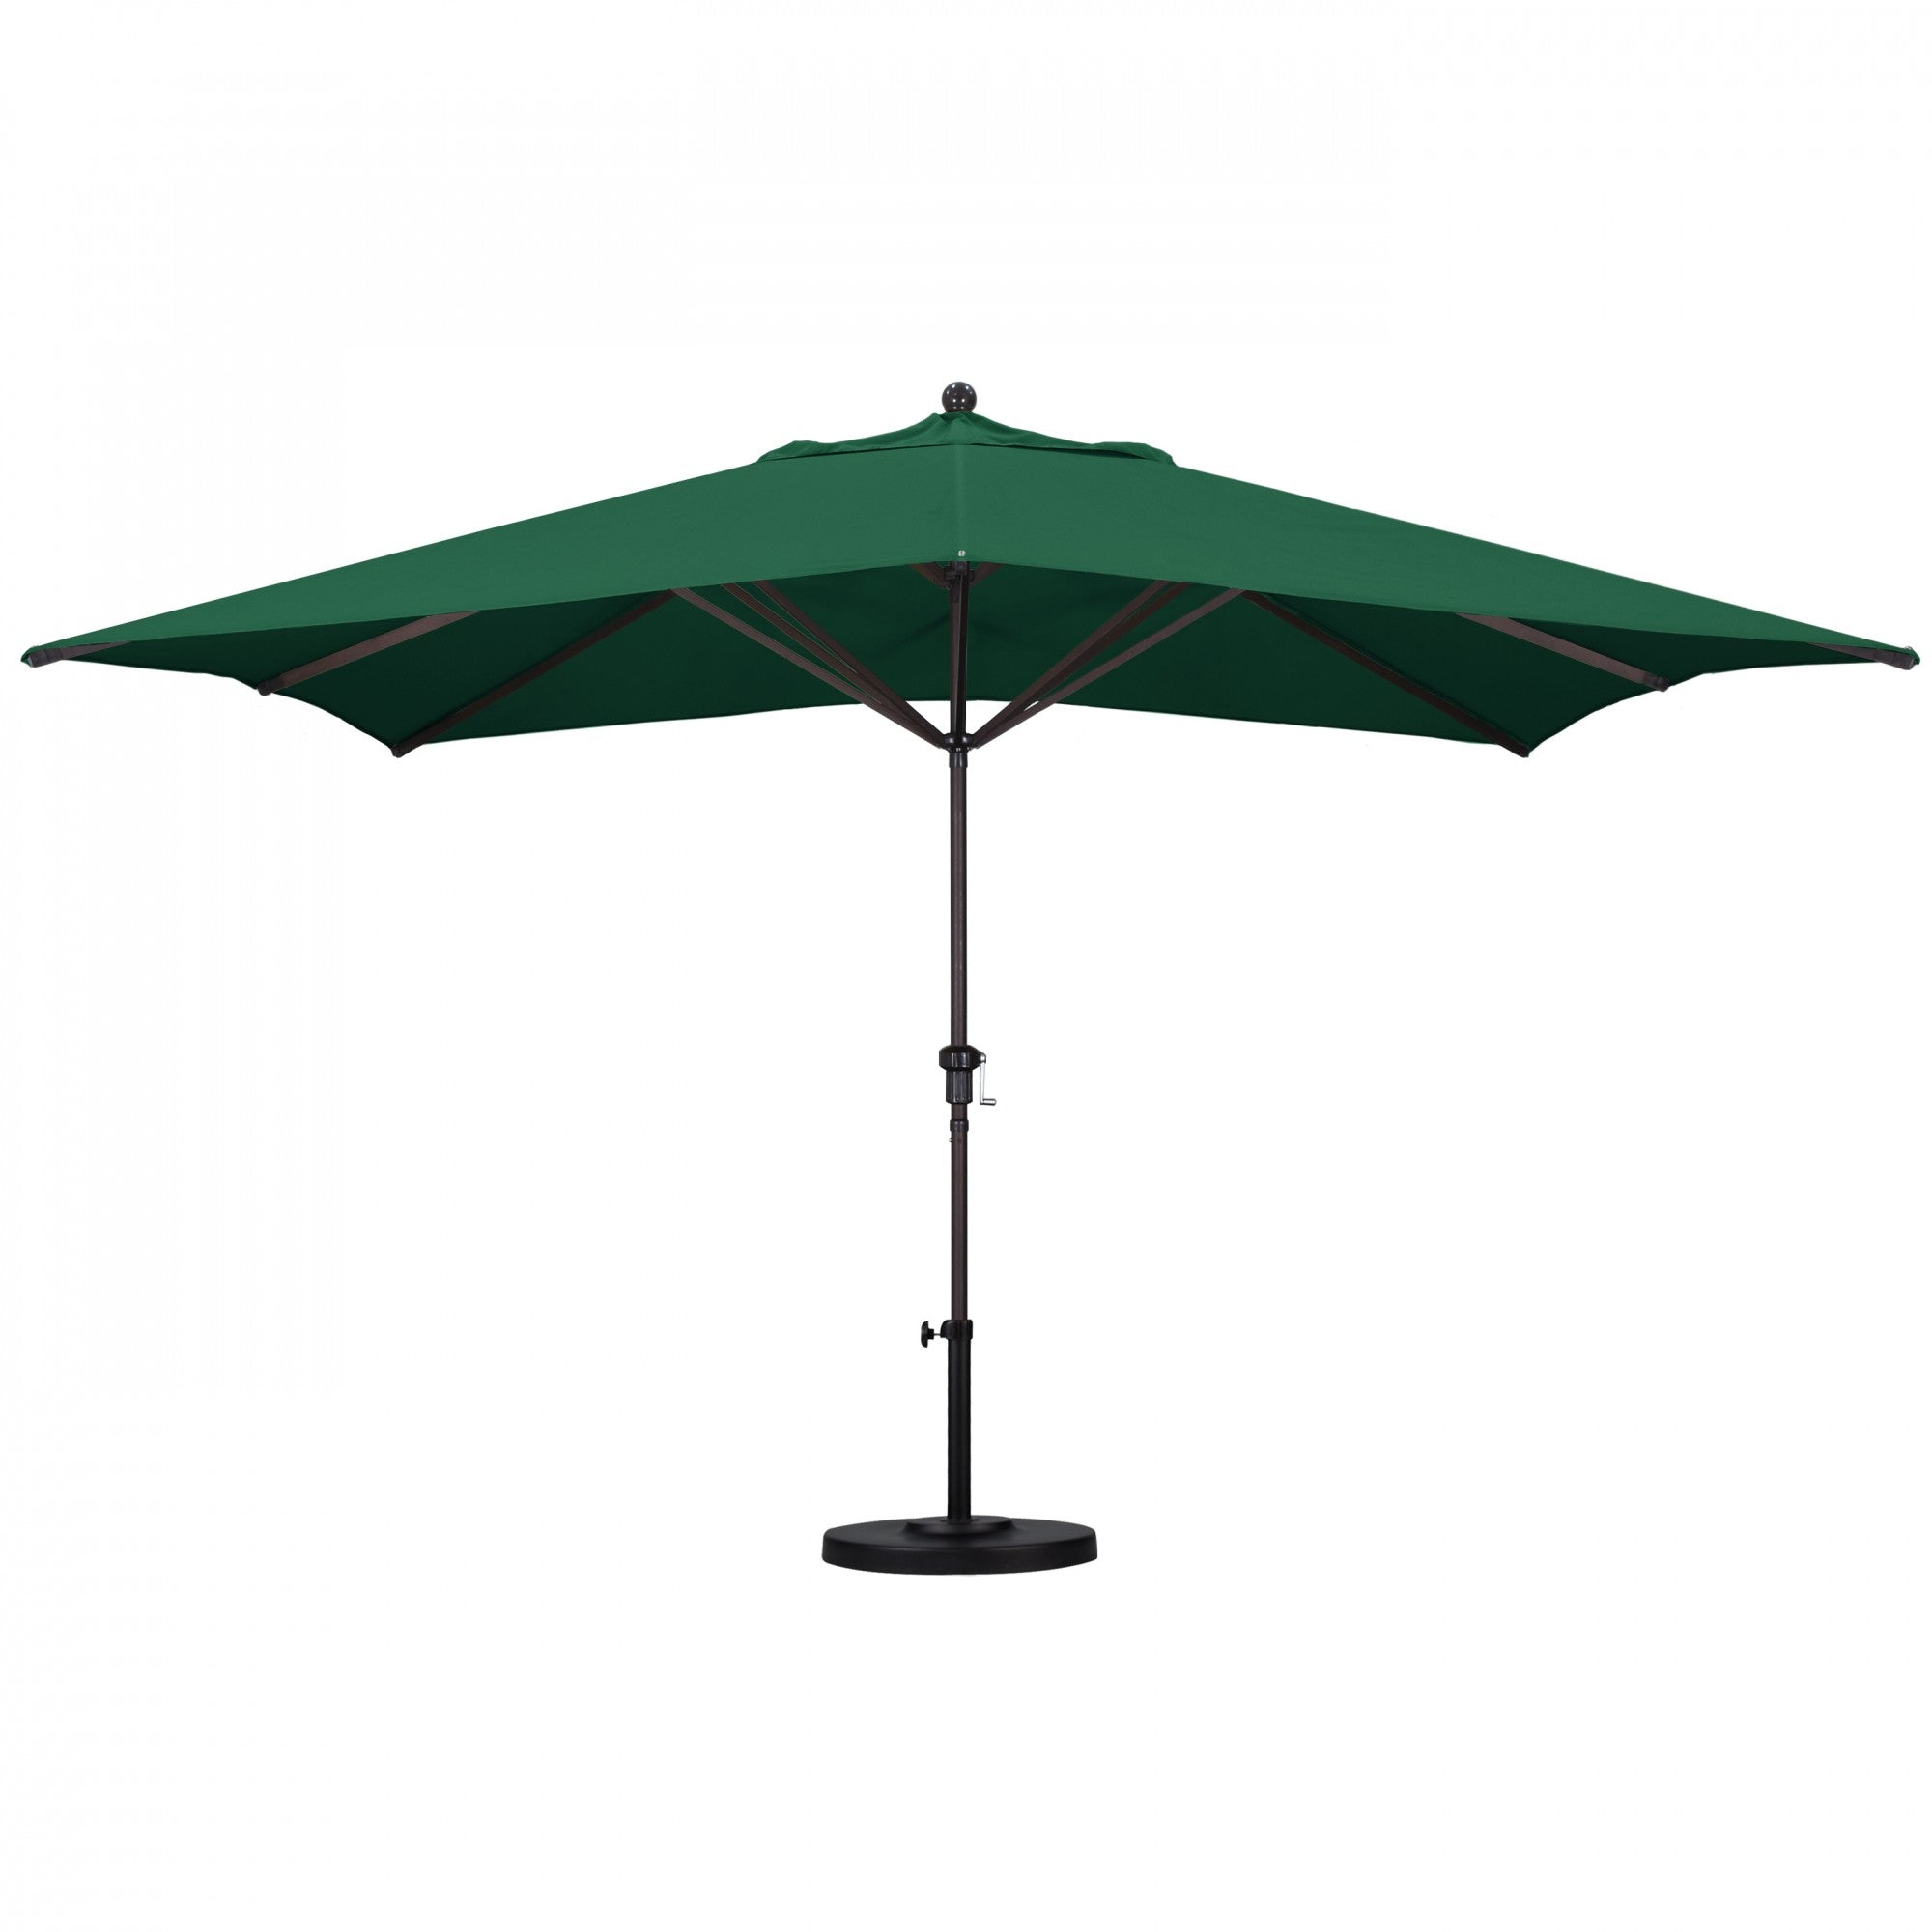 California Umbrella - 11' - Patio Umbrella Umbrella - Aluminum Pole - Forest Green - Sunbrella  - GS1188117-5446